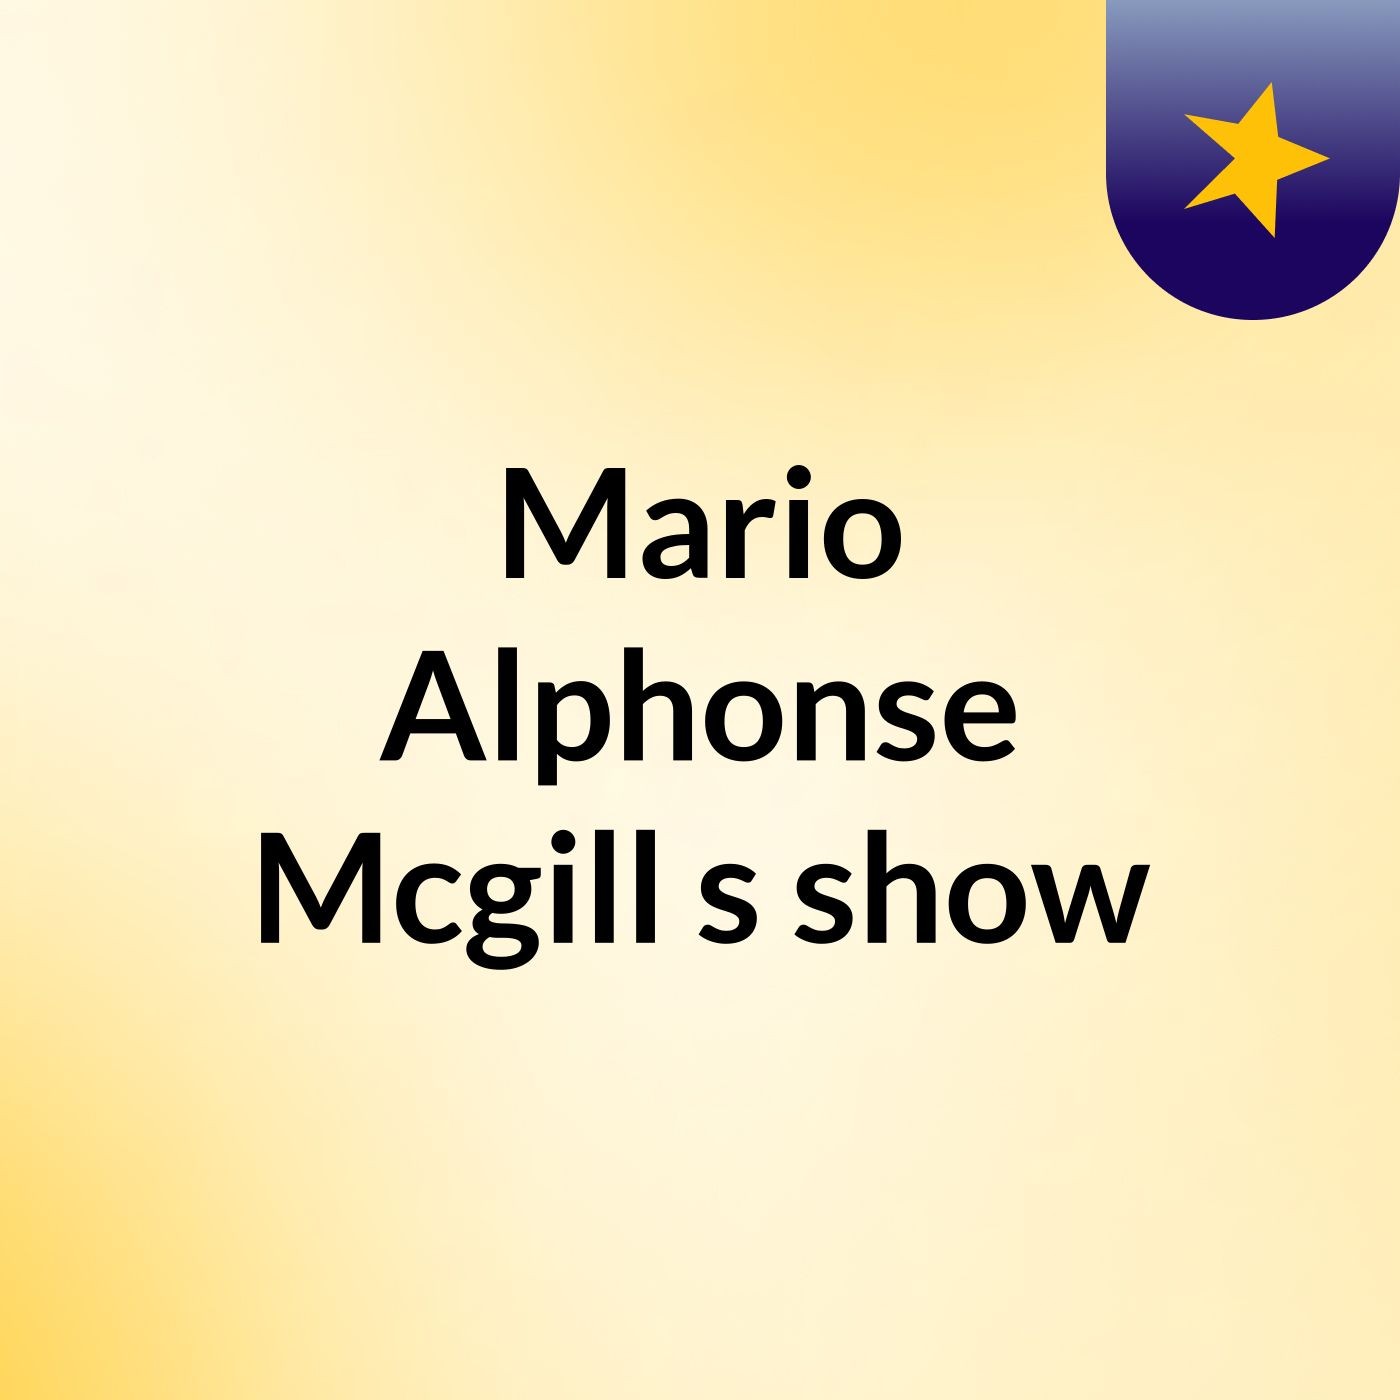 Mario Alphonse Mcgill's show